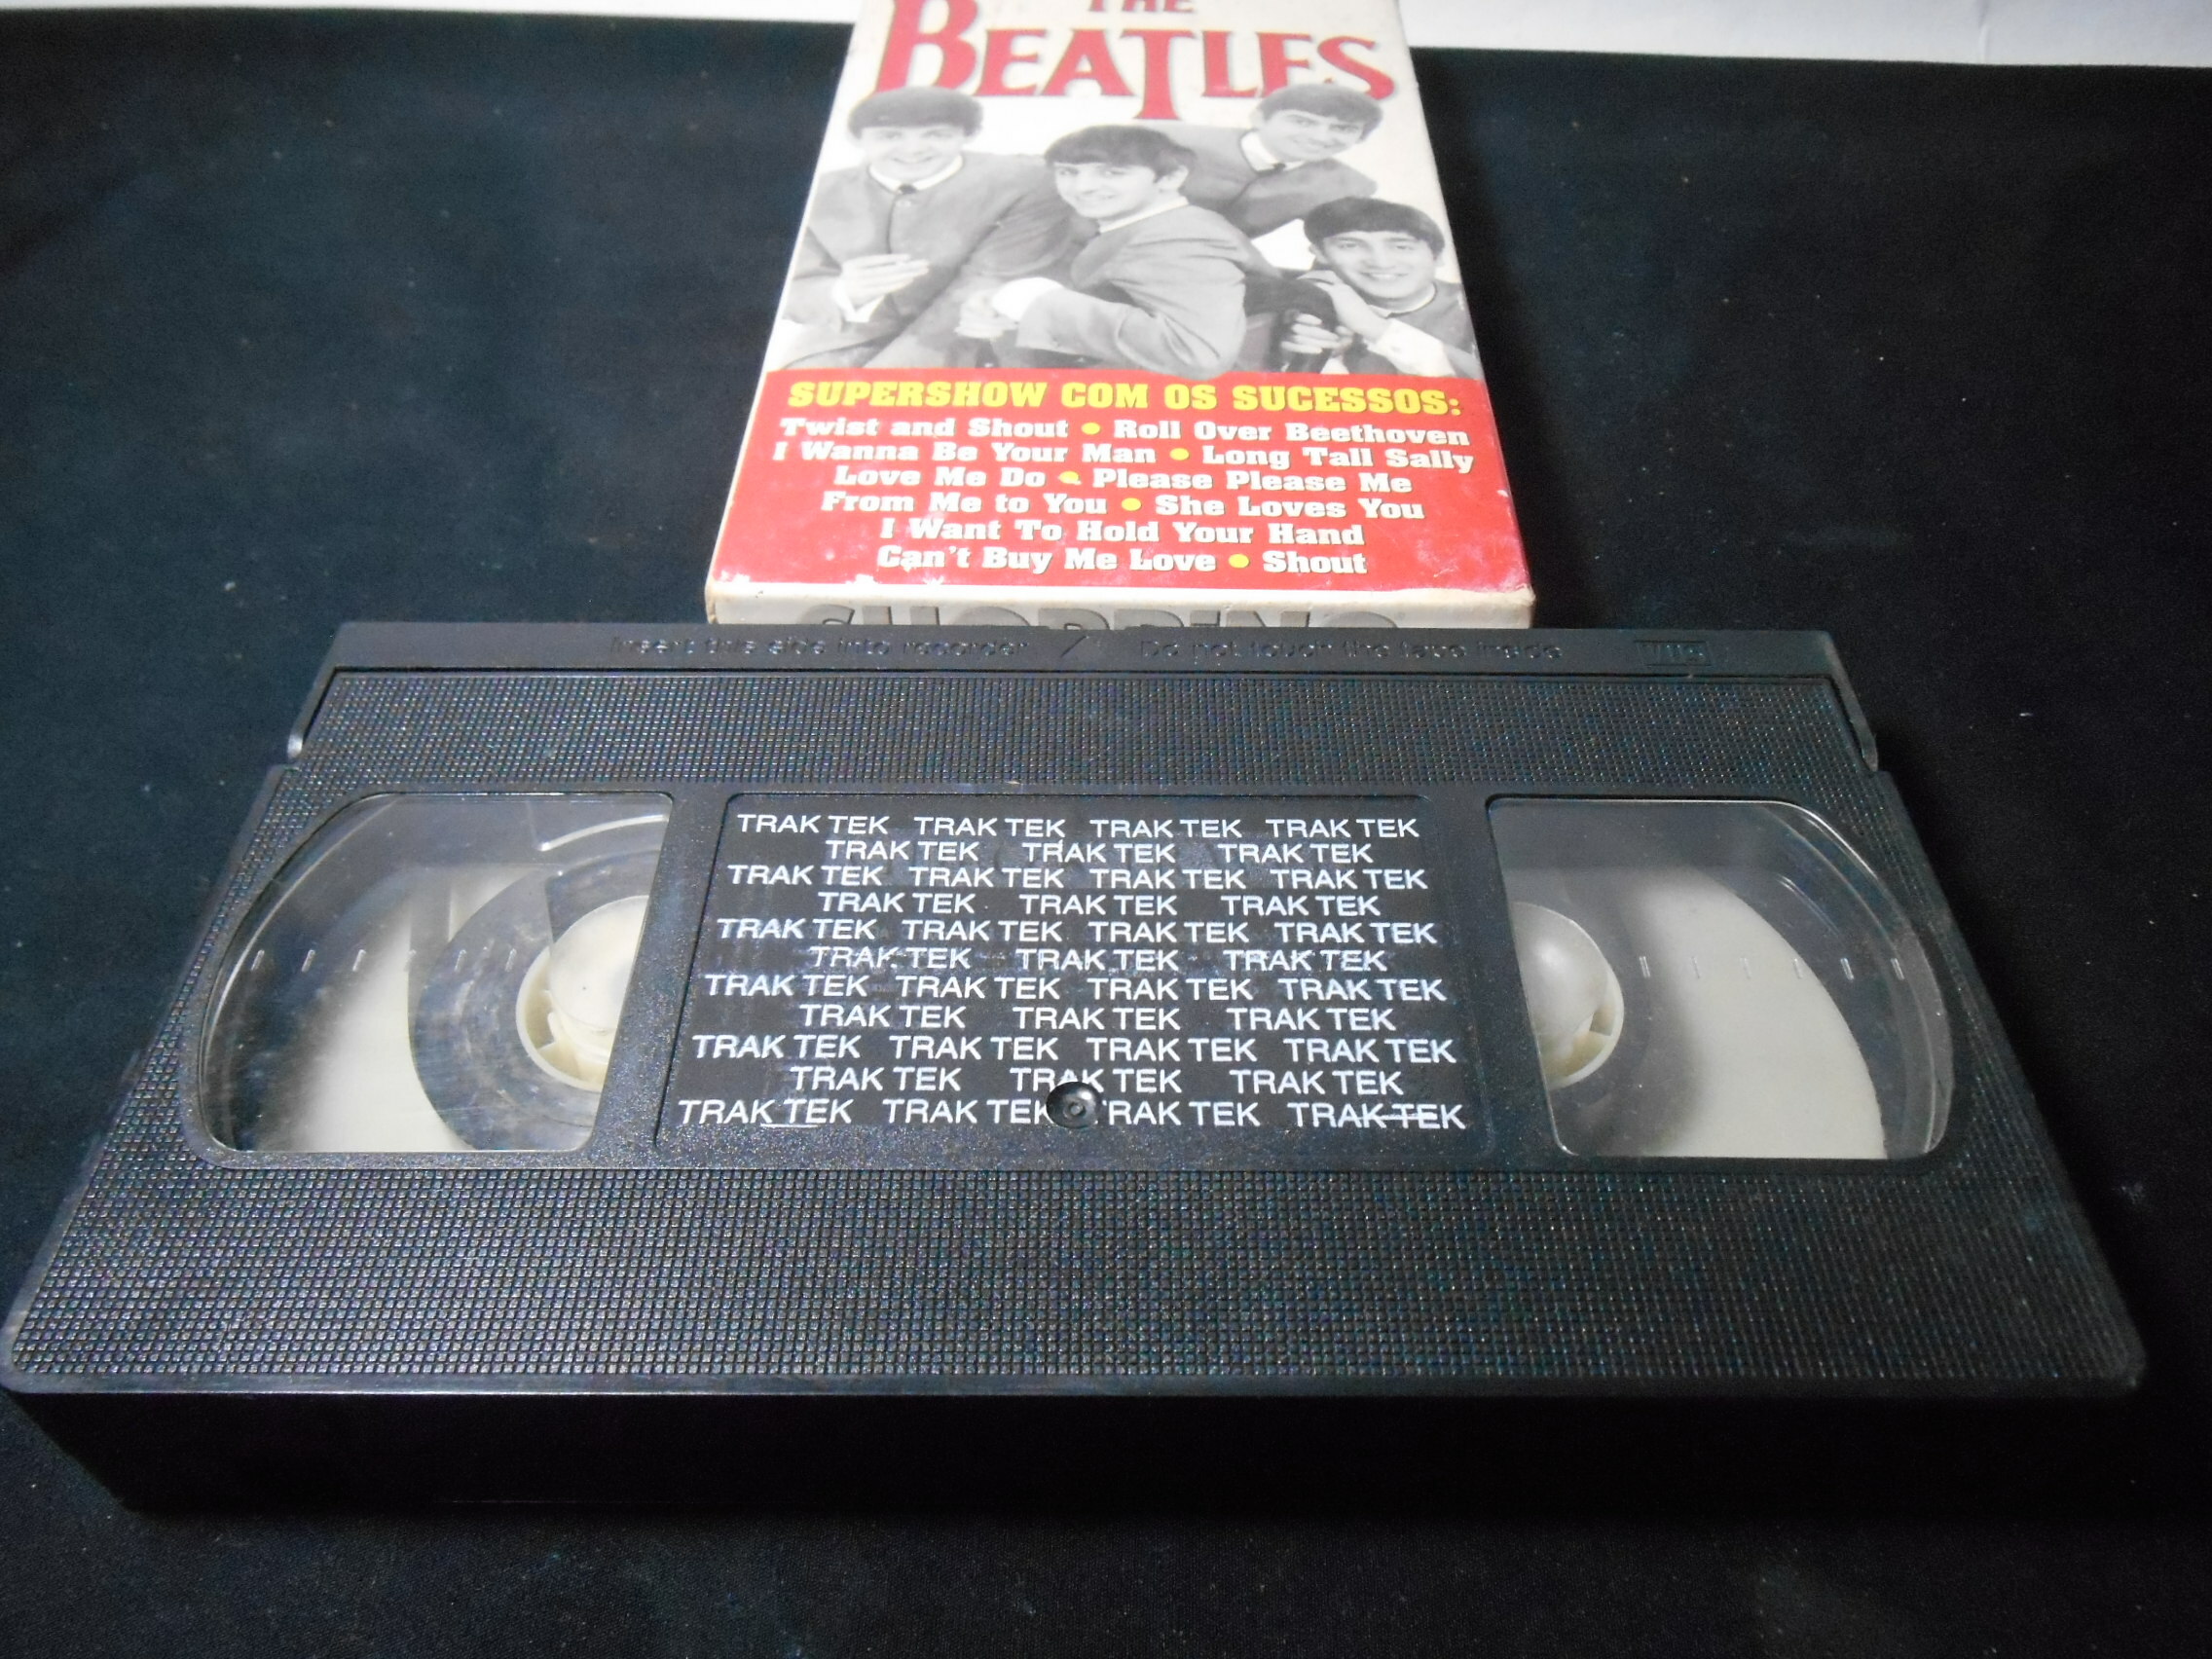 Fita VHS - Beatles The - Ao Vivo no Ready Steady Go